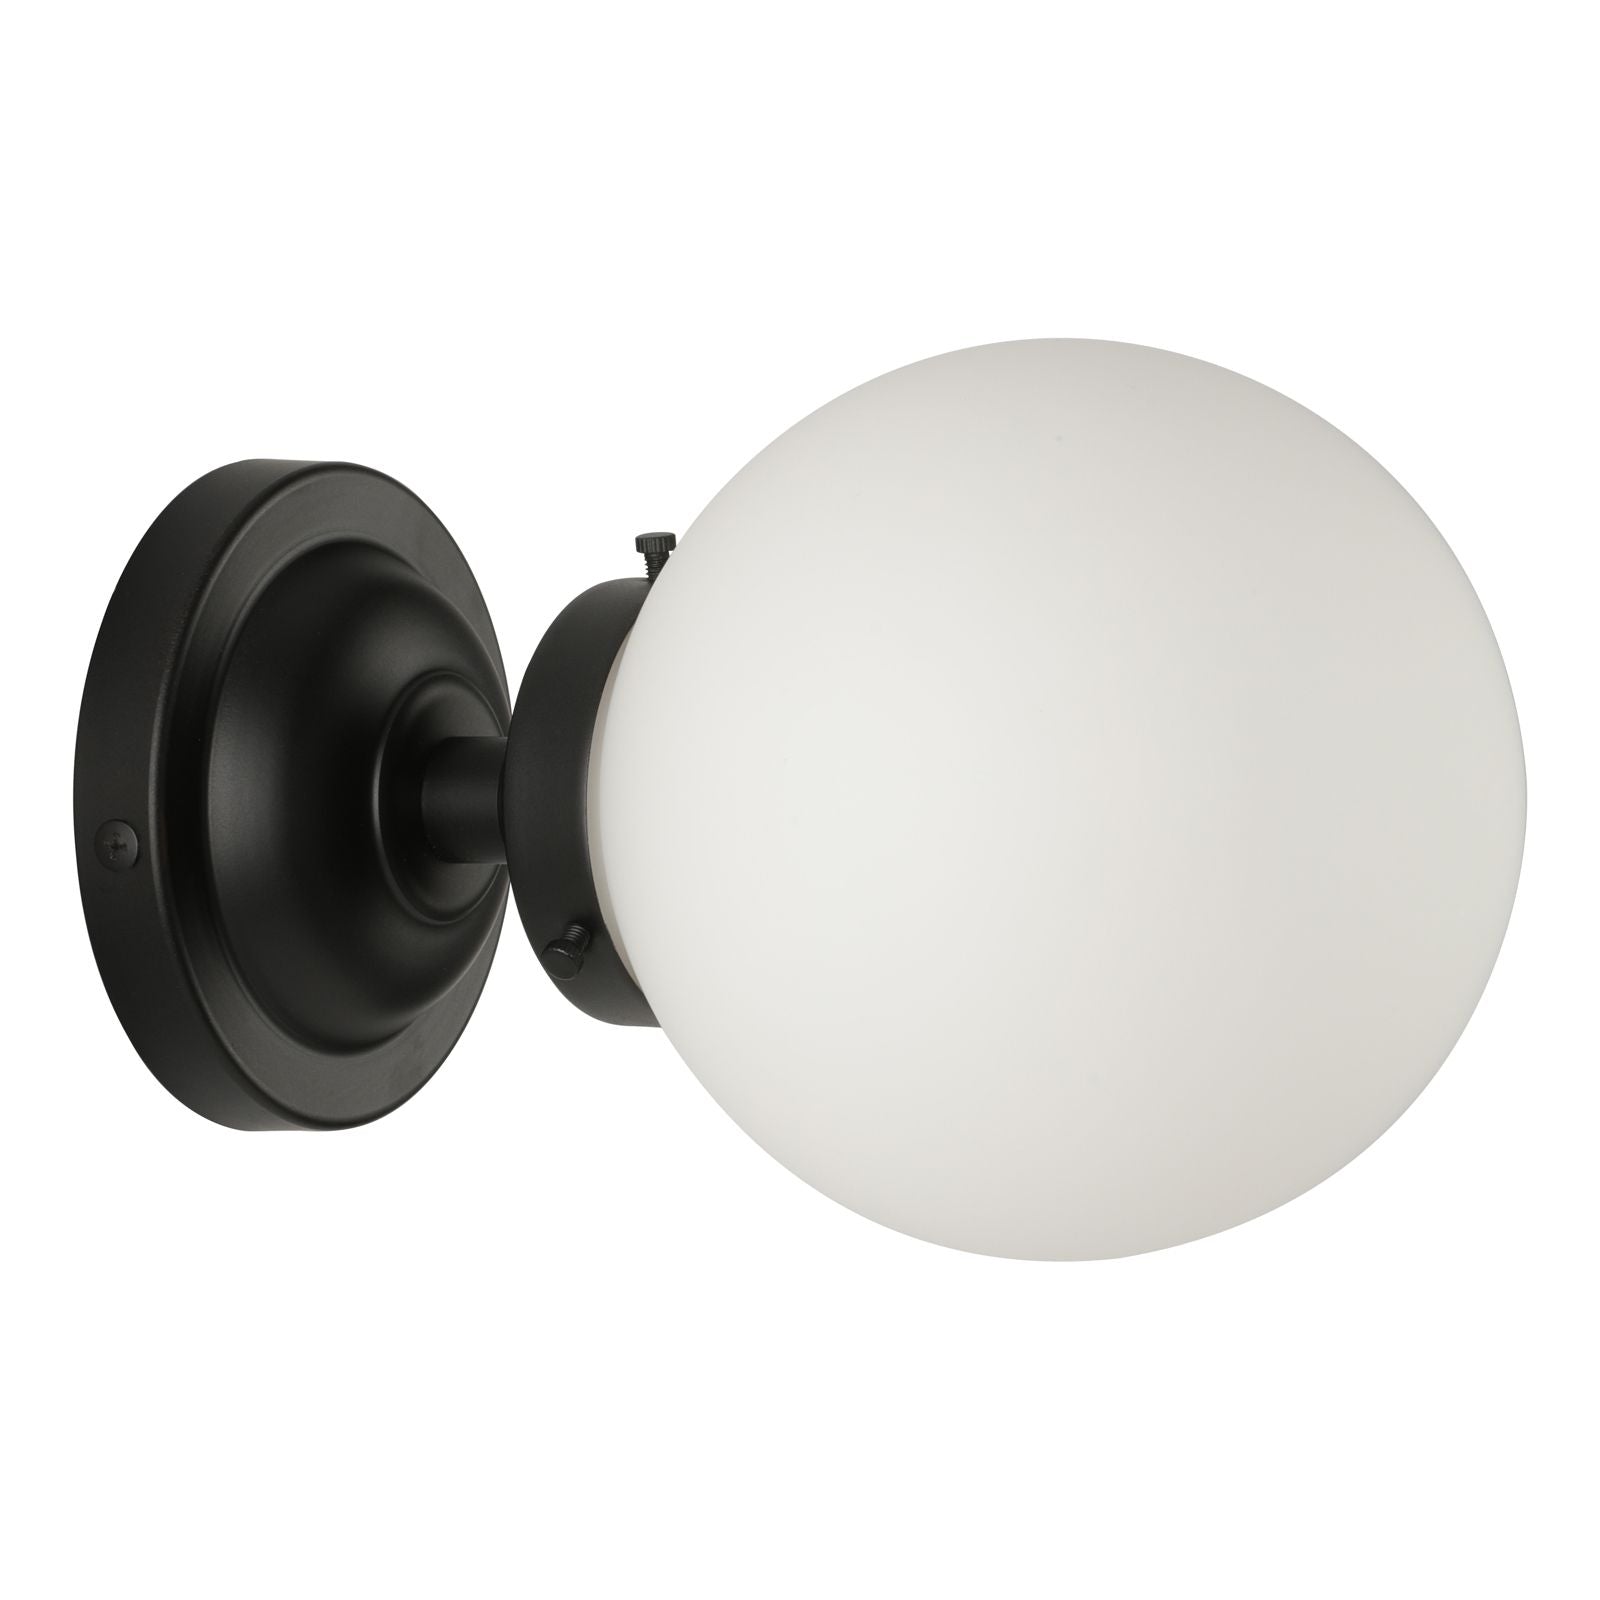 David Hunt Buckley single wall light, polished chrome/Black, IP44 rated